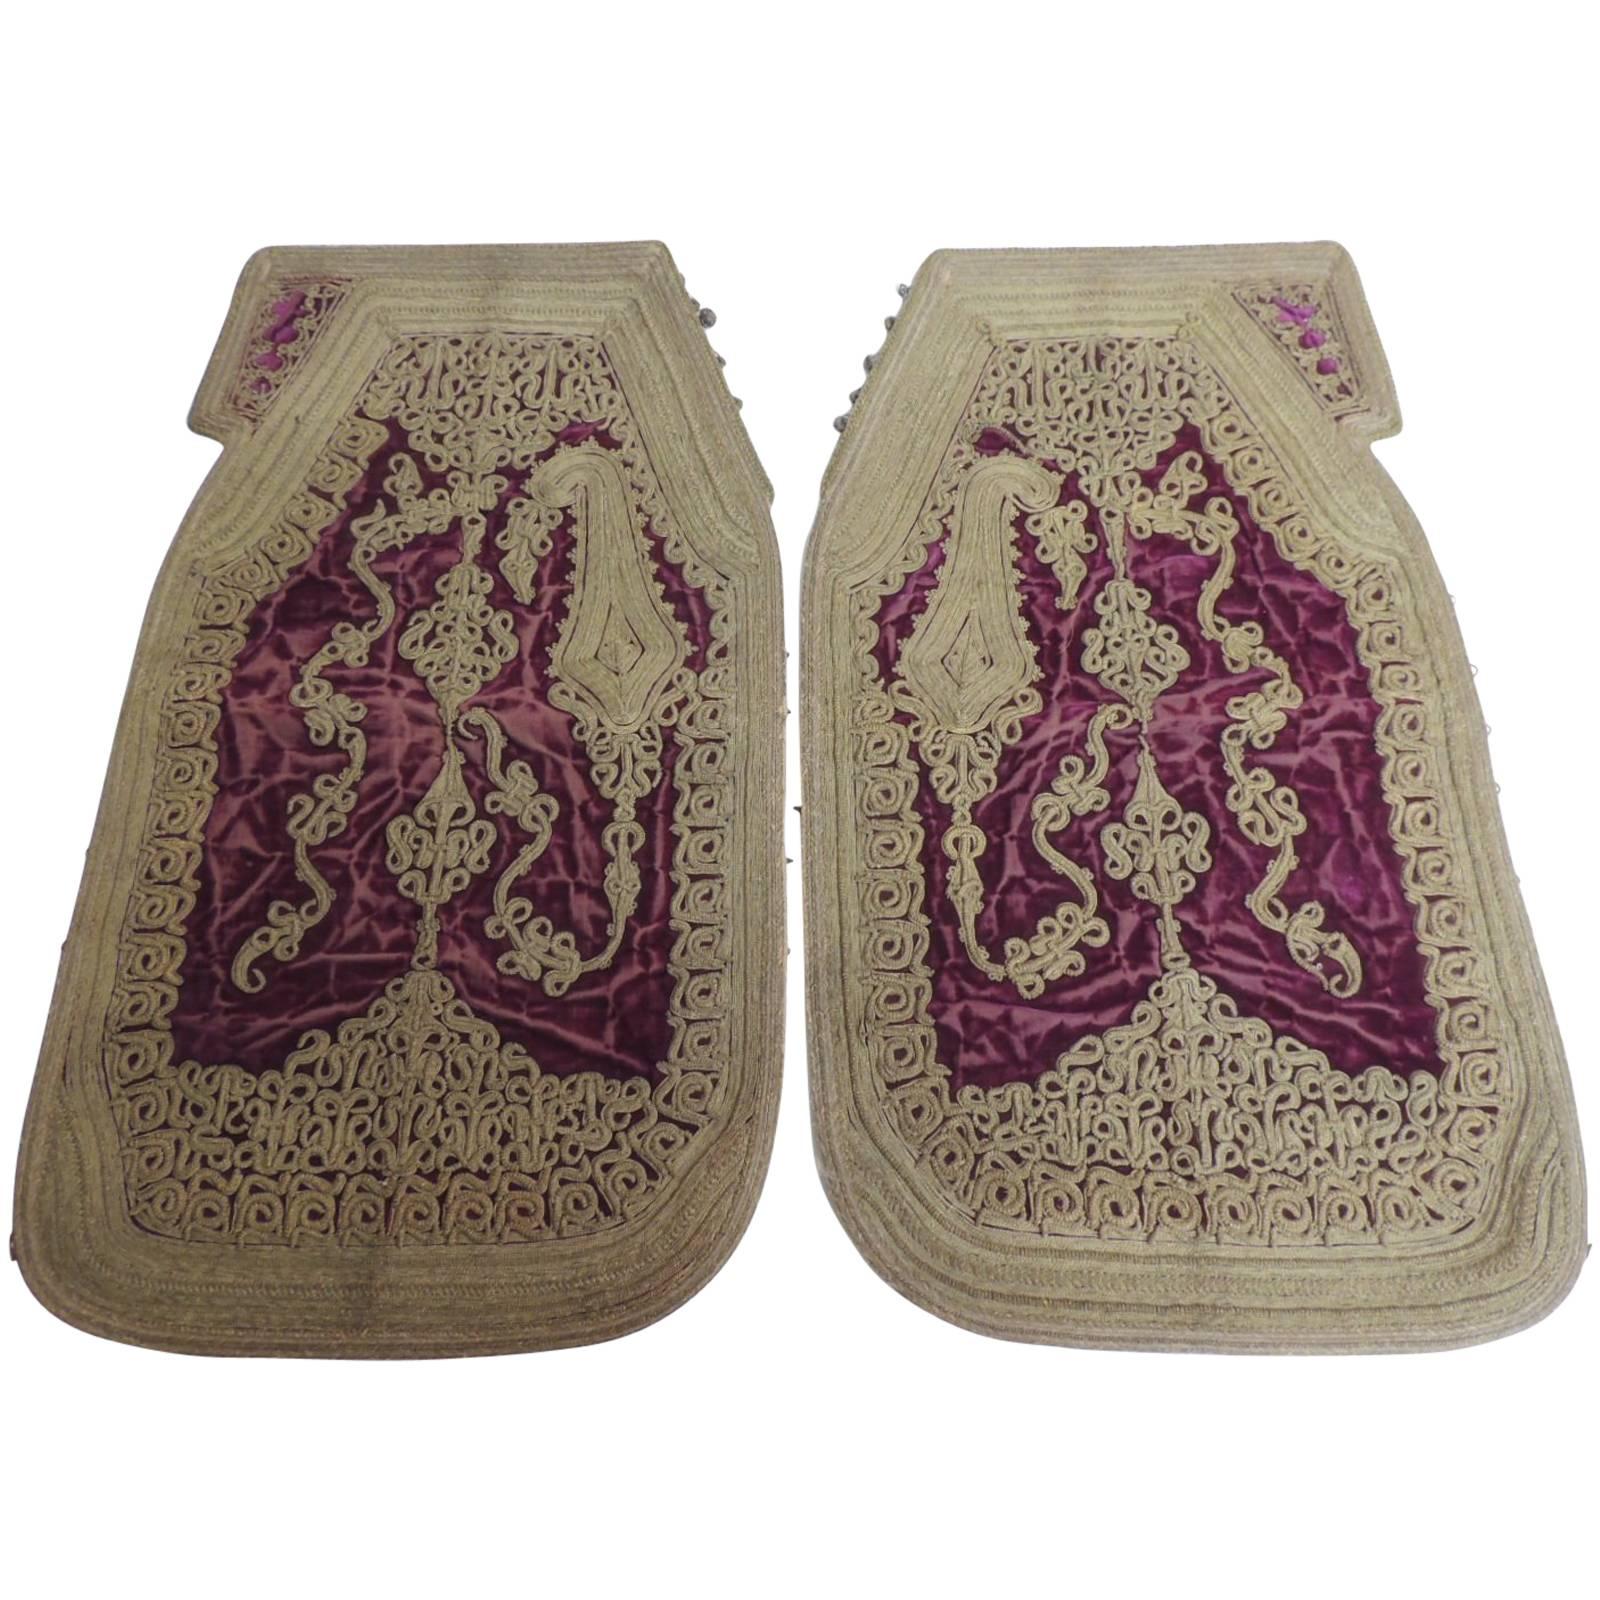 18th Century Persian Embroidered Metallic Threads on Silk Velvet Vest Panels